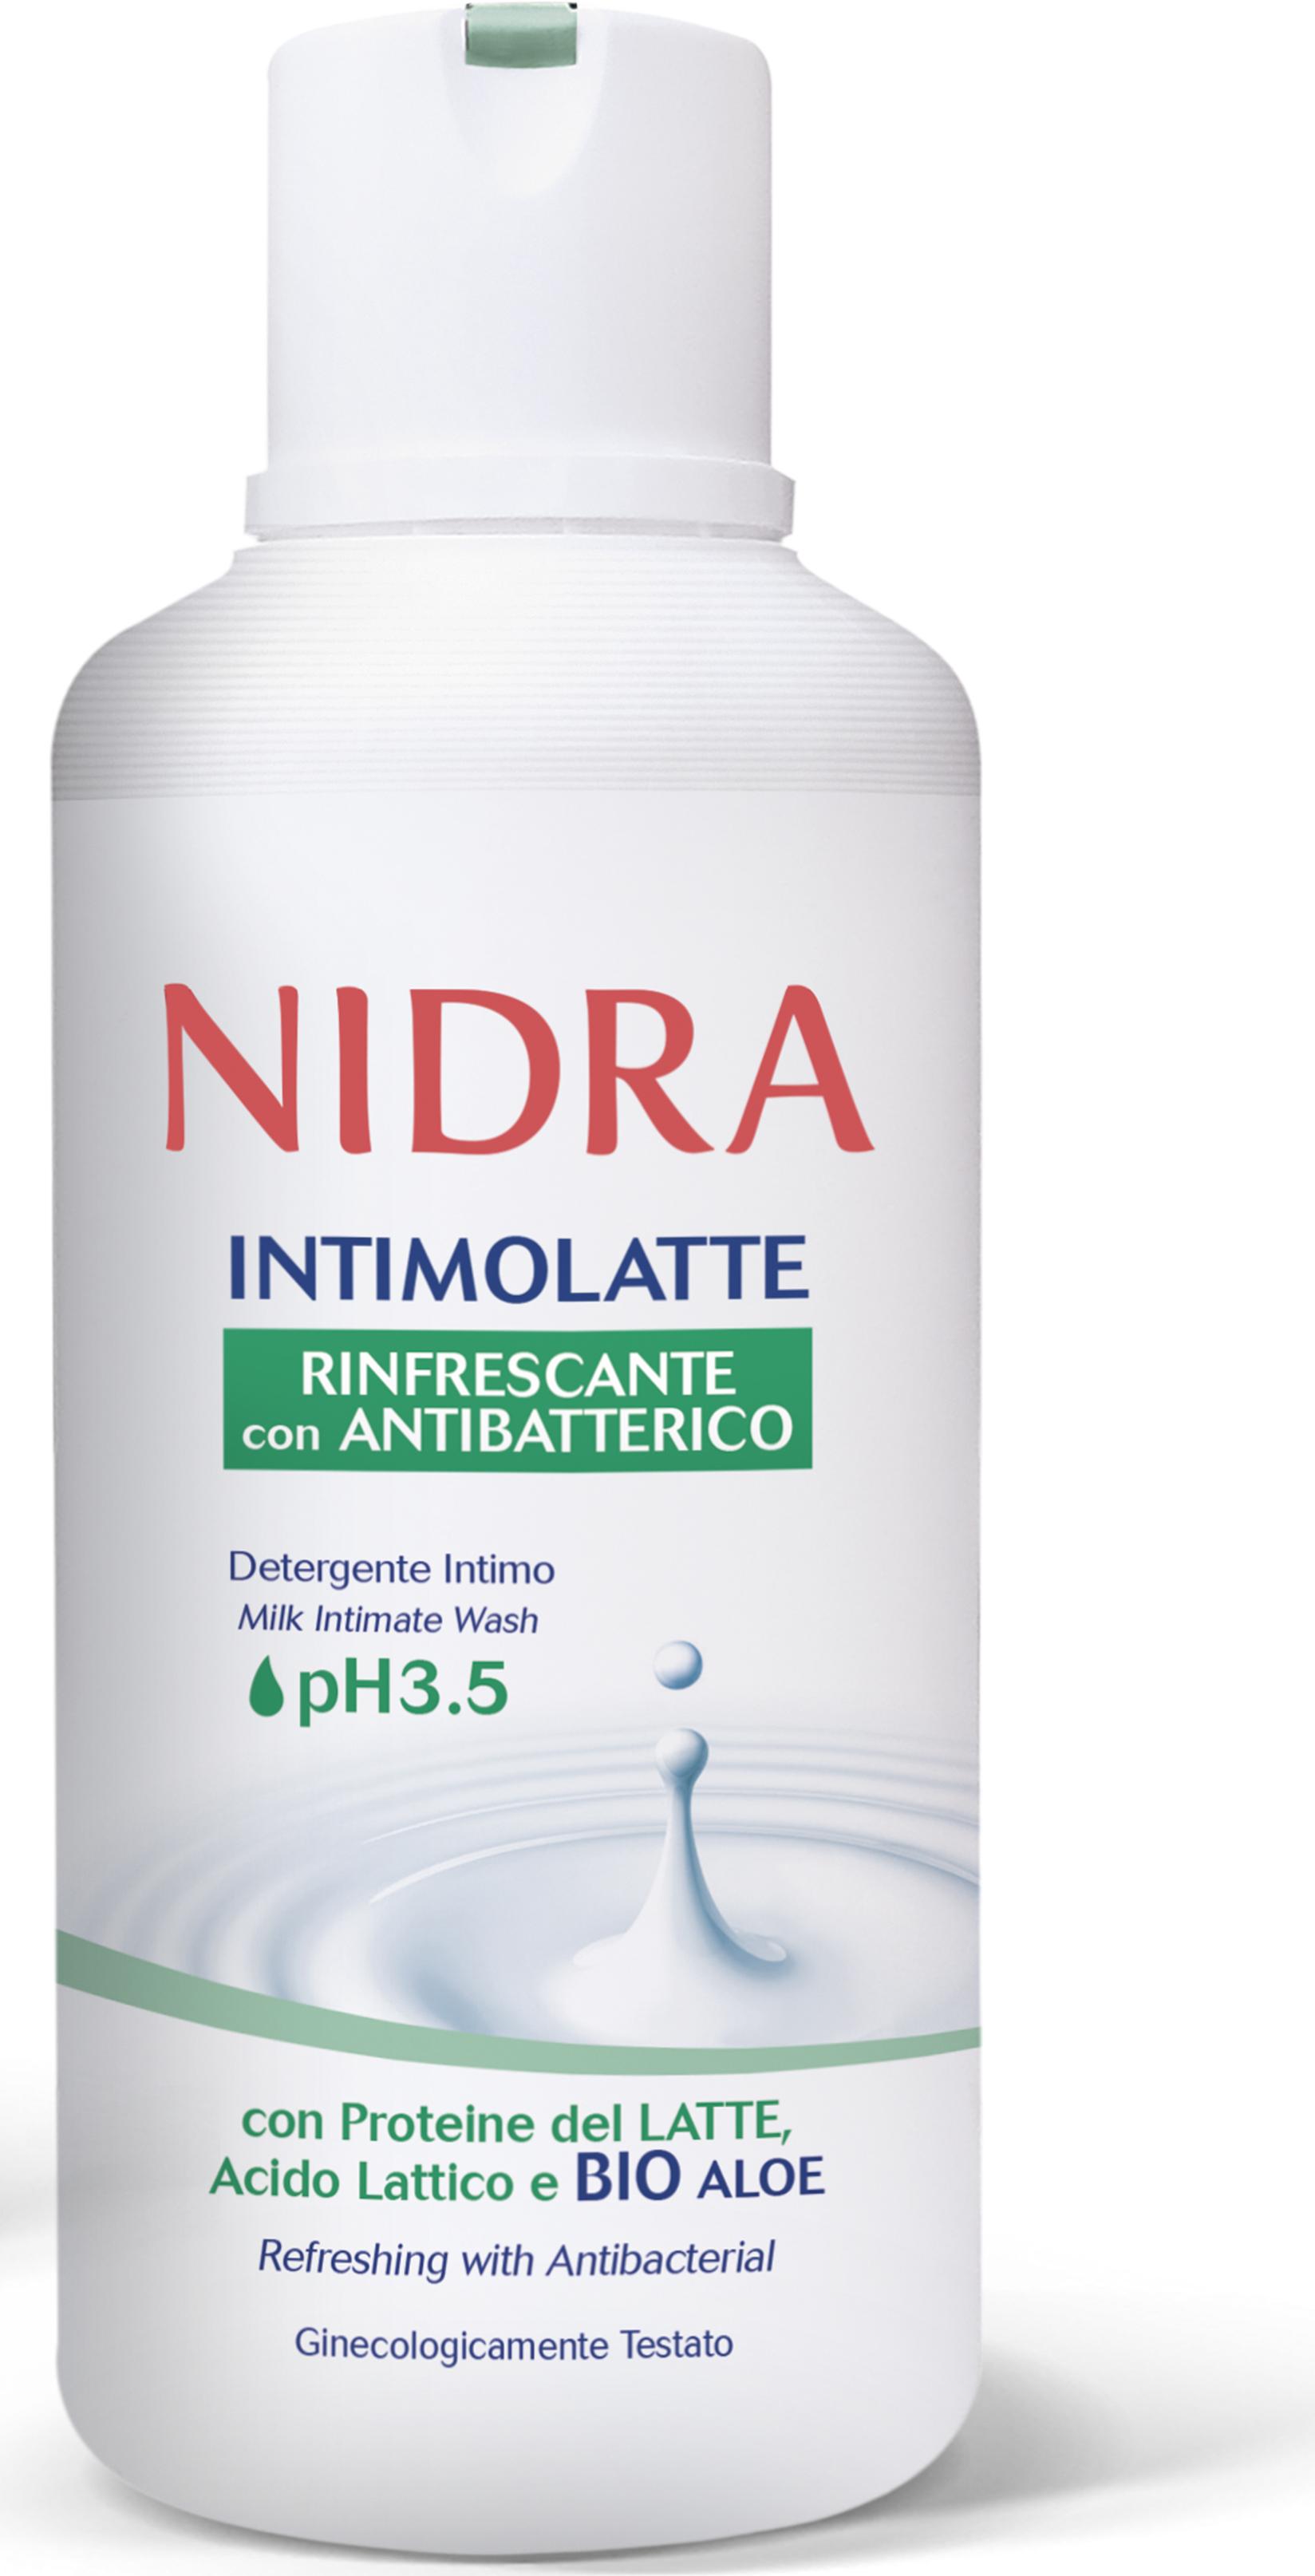 Selected image for NIDRA Antibakterijski intimni sapun, 500ml